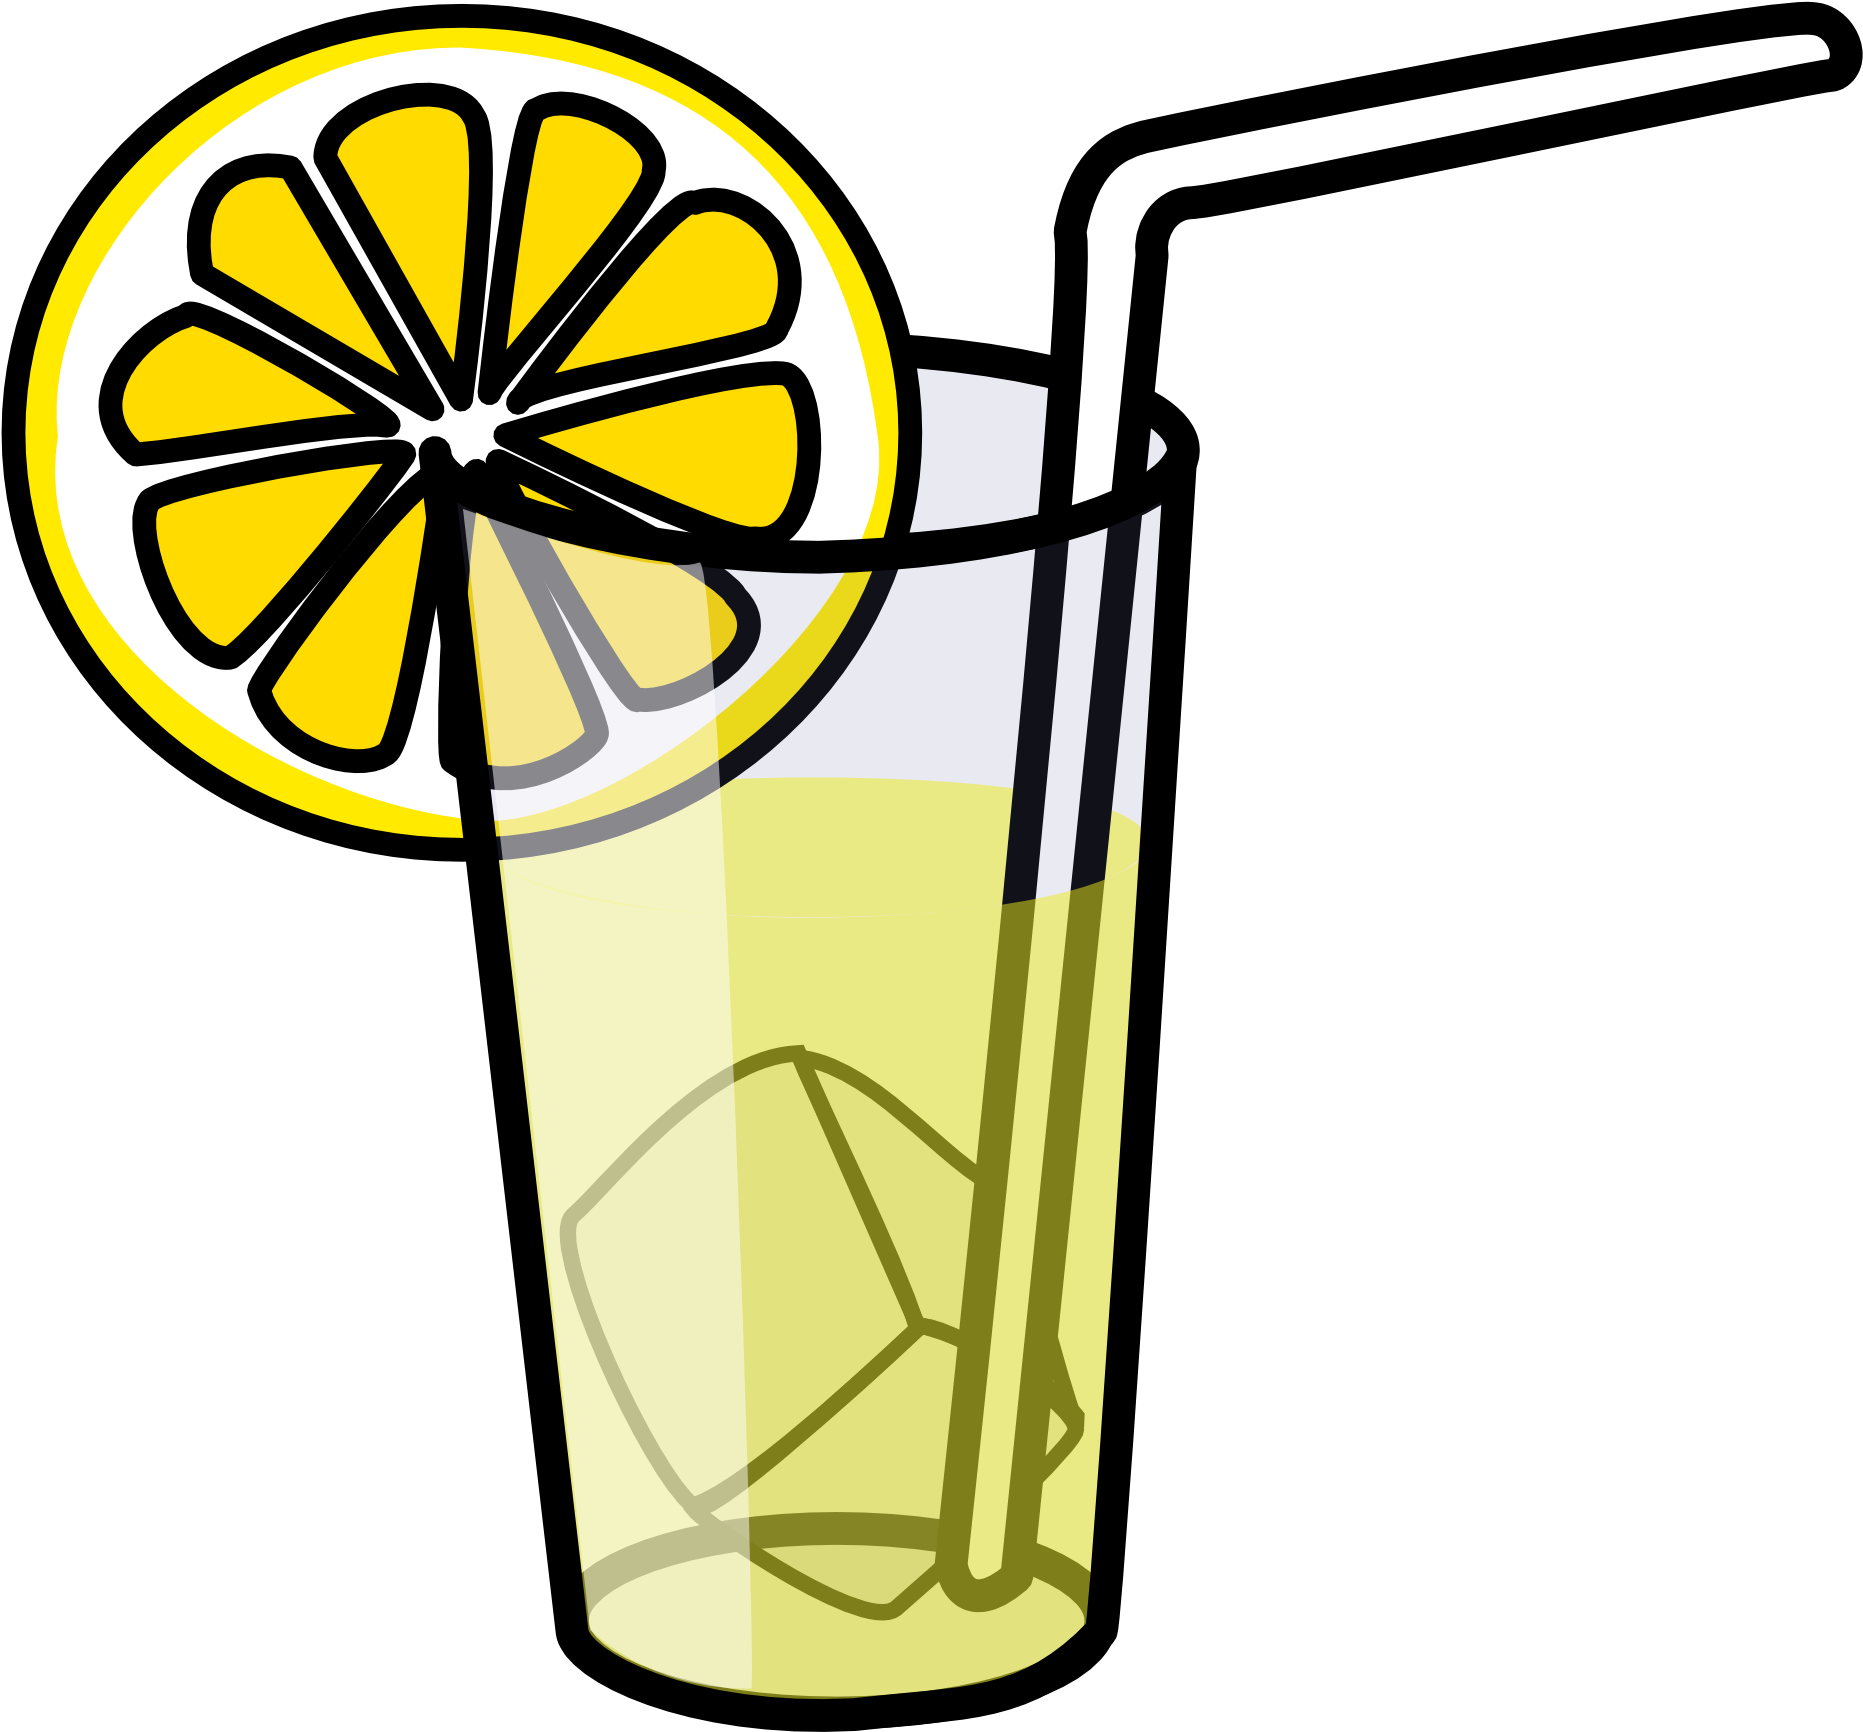 Lemonade Glass Clip Art At Clker Lemonade Clipart